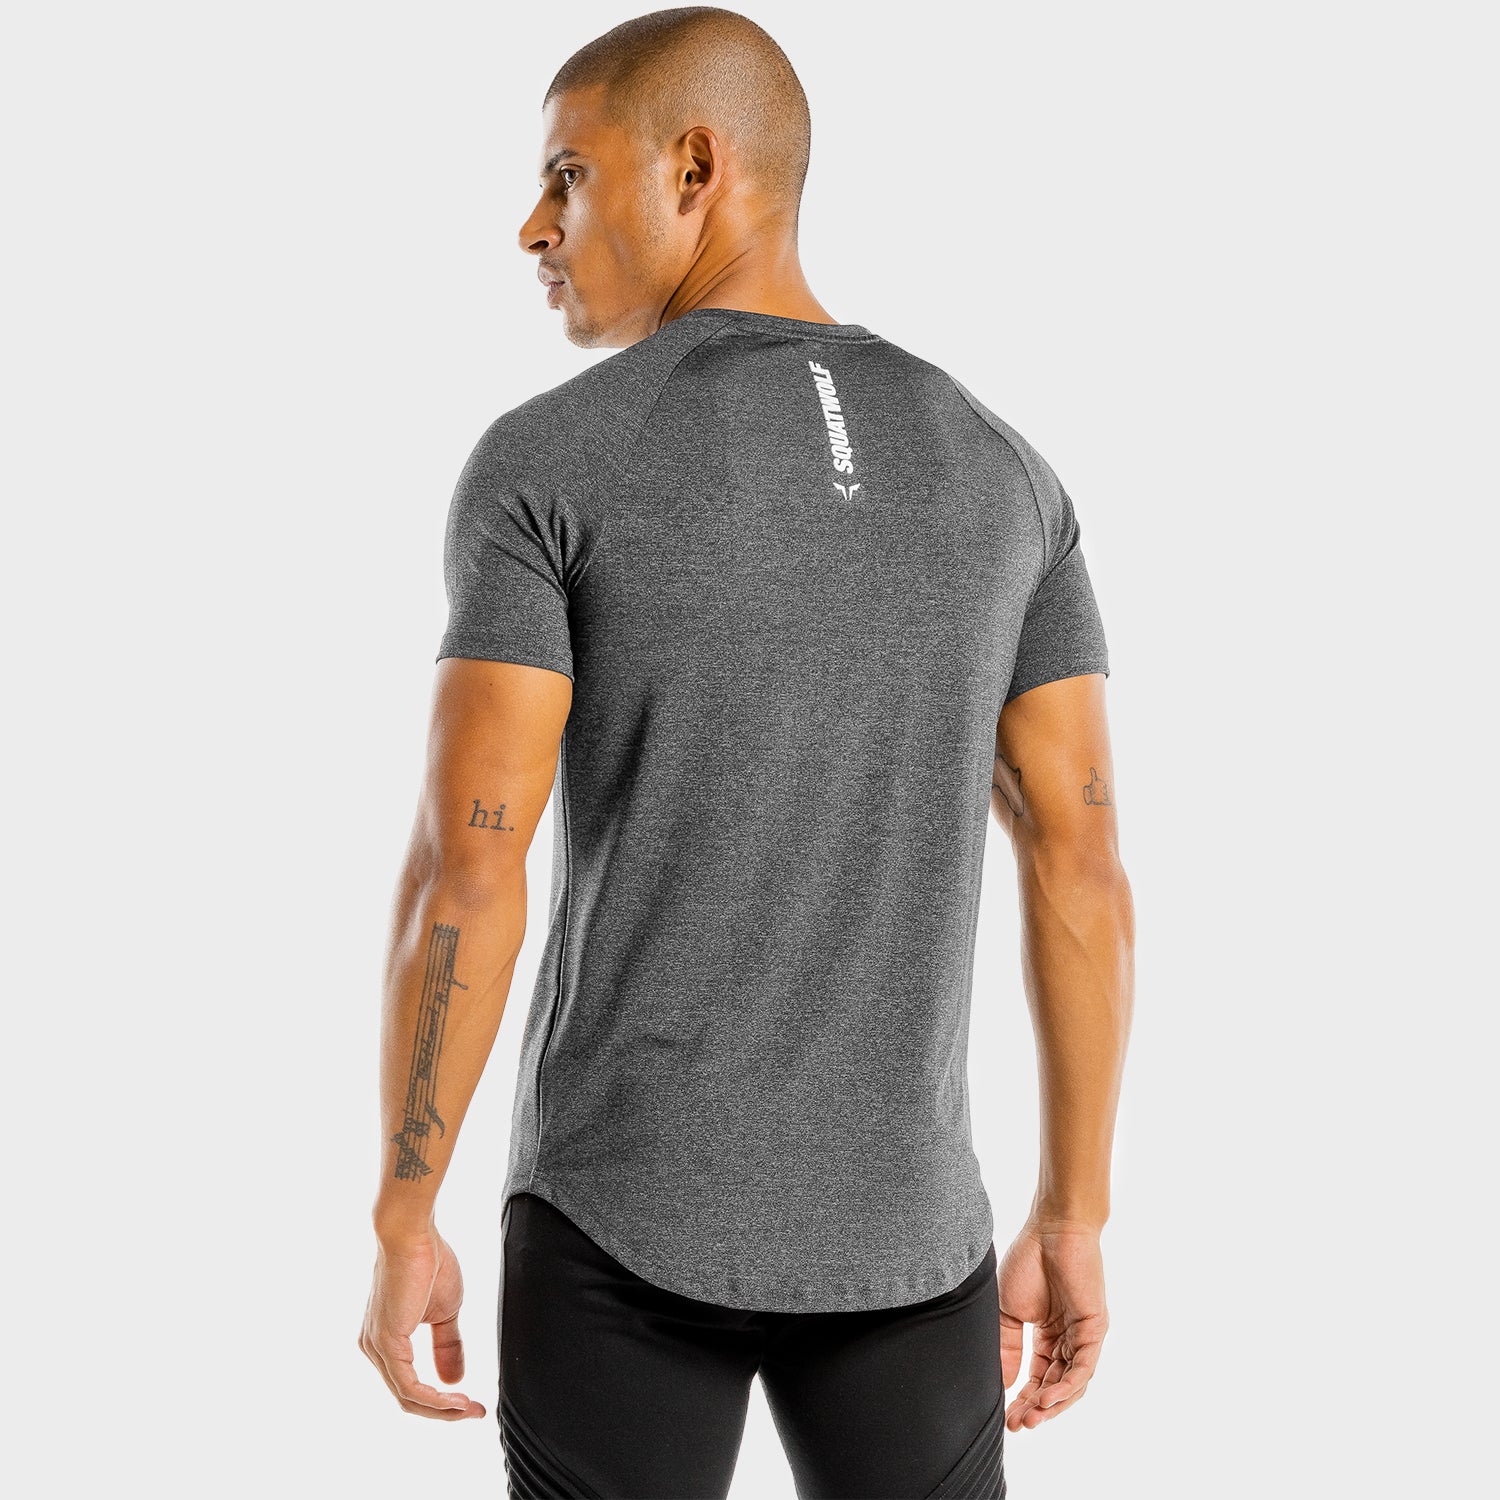 squatwolf-workout-shirts-for-men-melange-workout-tee-grey-gym-wear